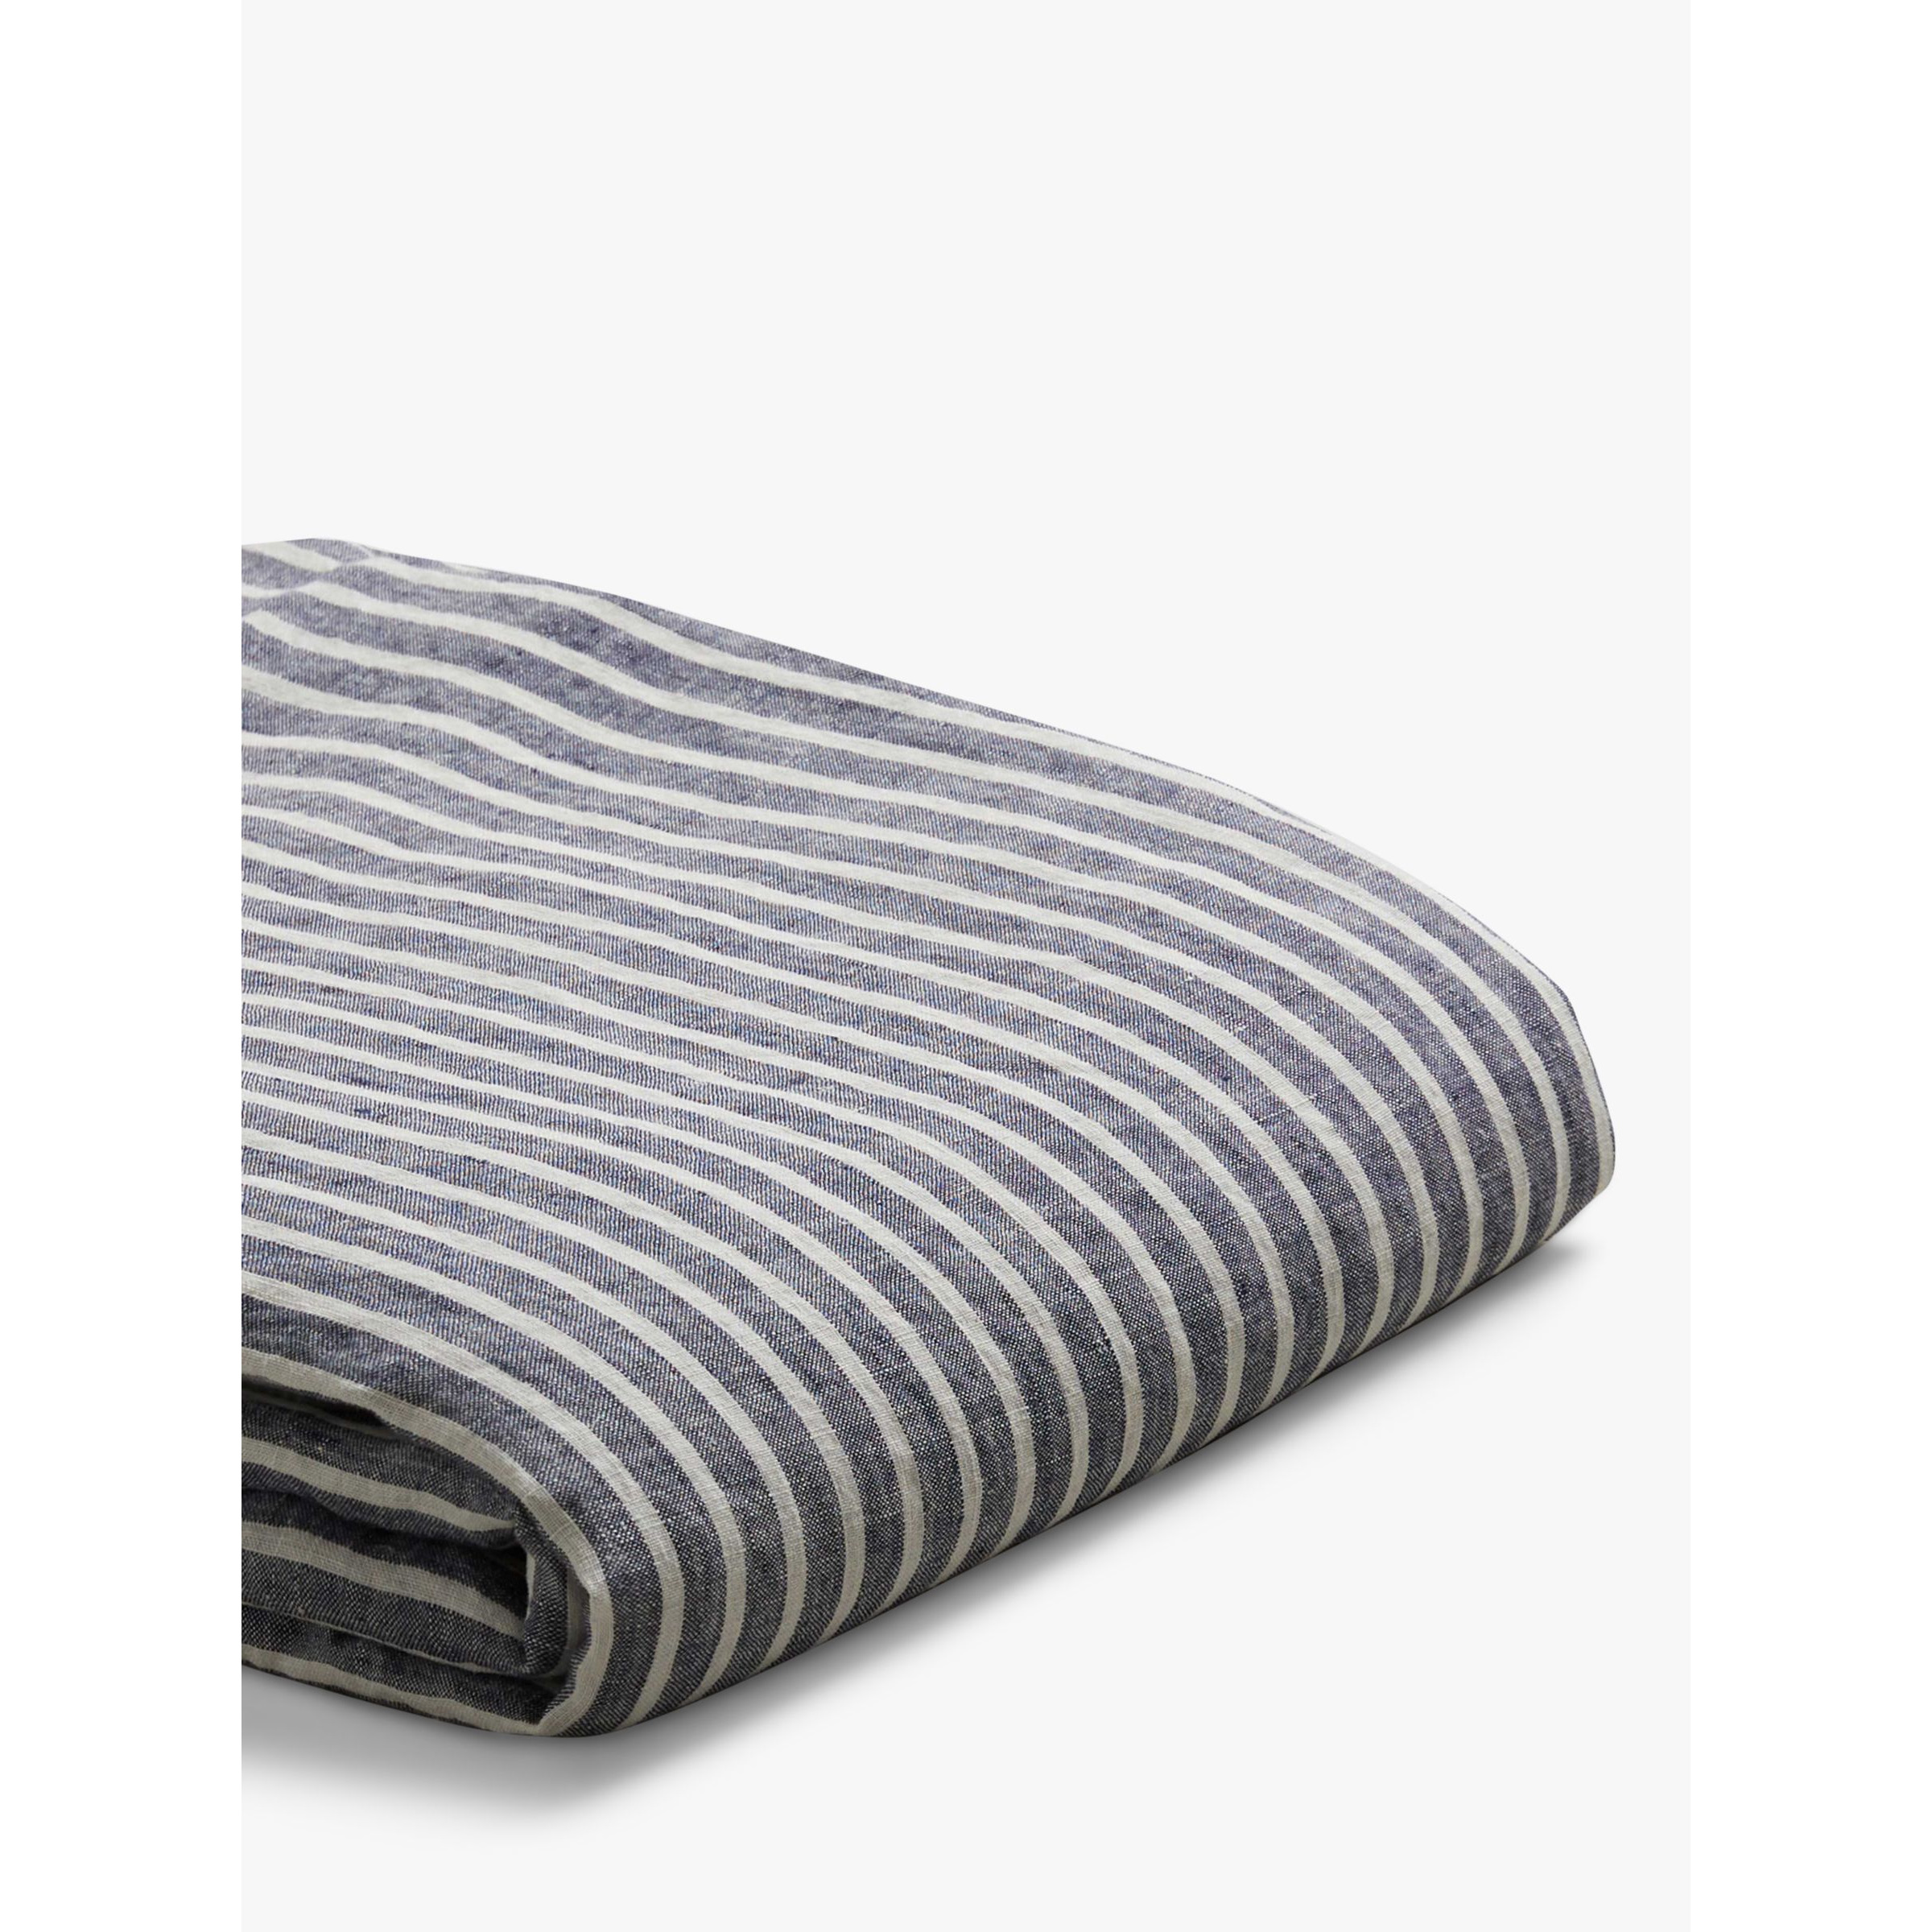 Piglet in Bed Stripe Linen Flat Sheet - image 1